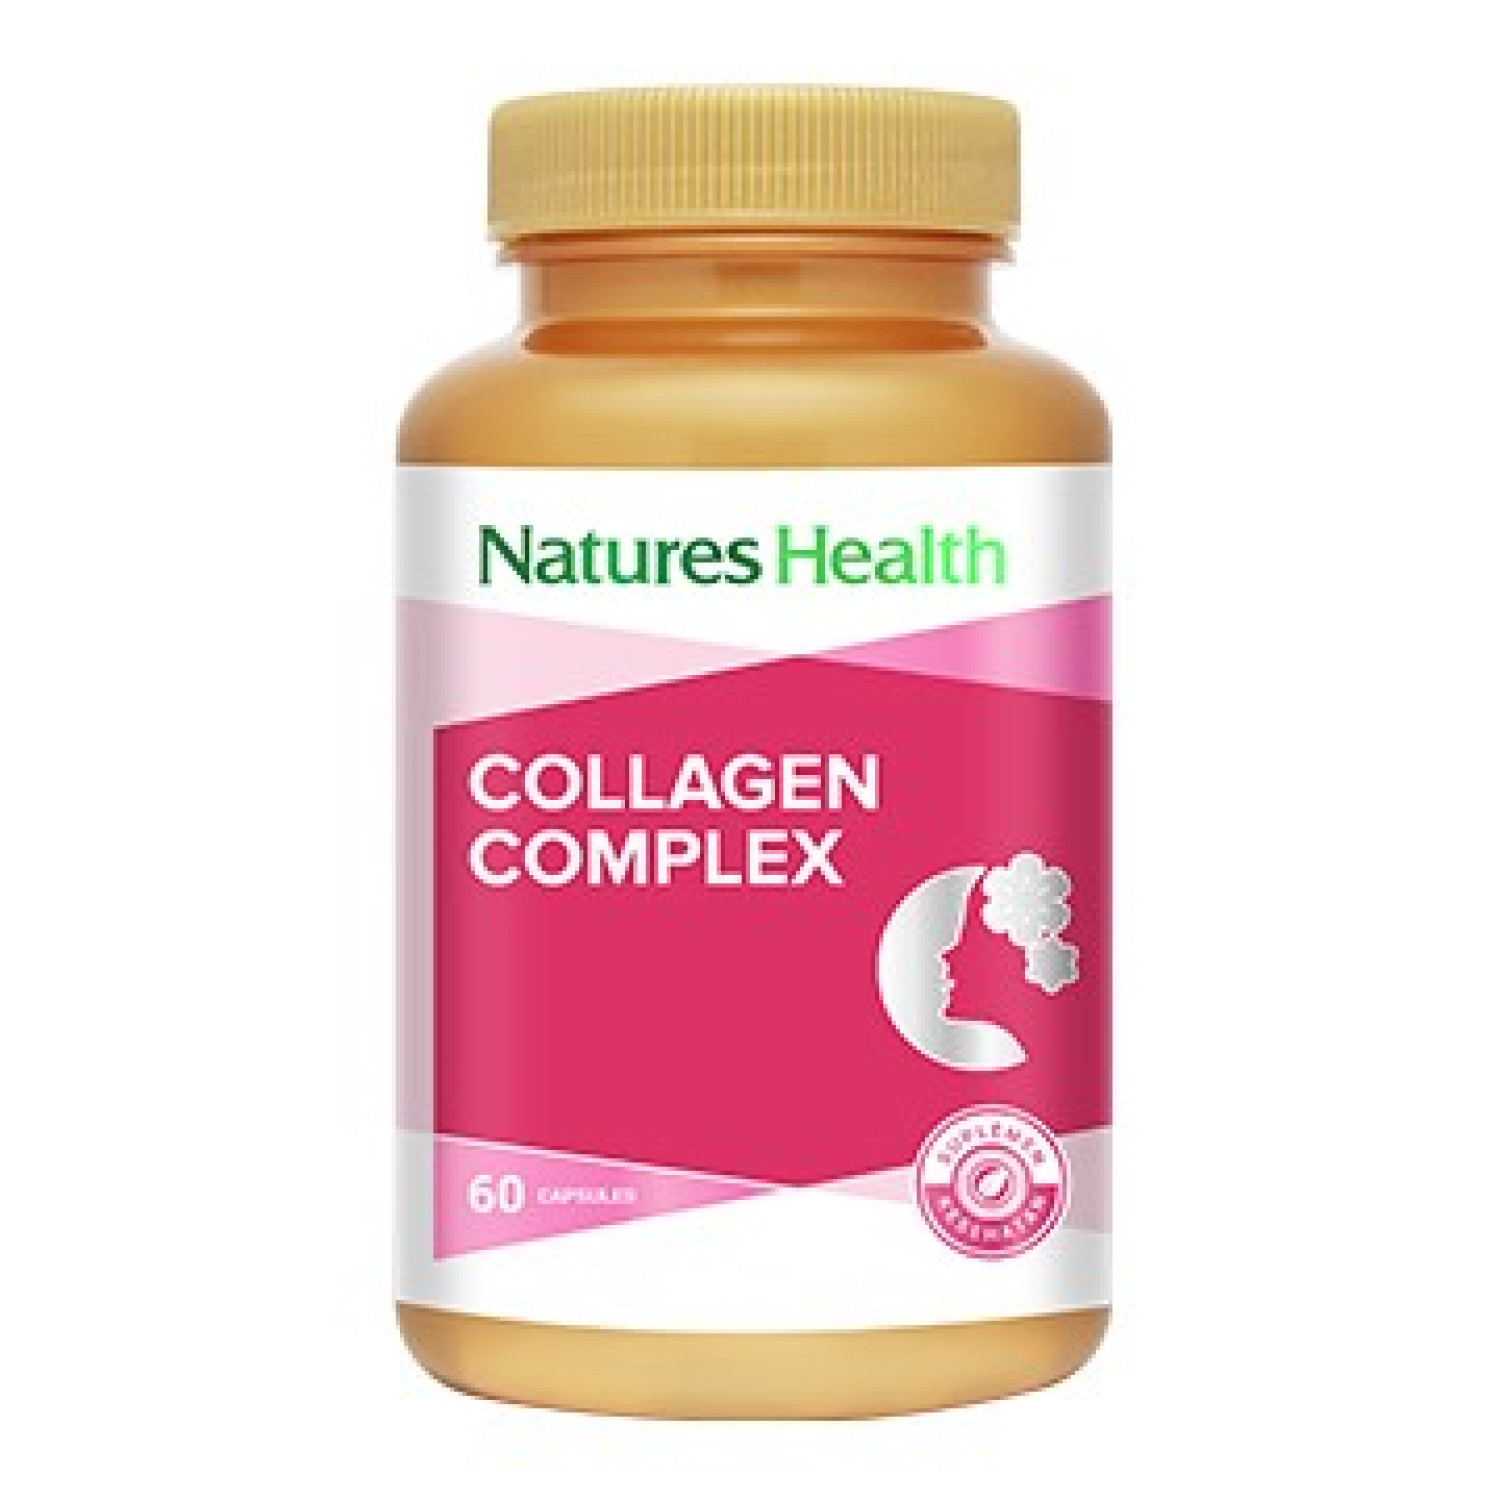 natures-health-collagen-complex-60-capsules-660e5ac5e41ab.jpeg